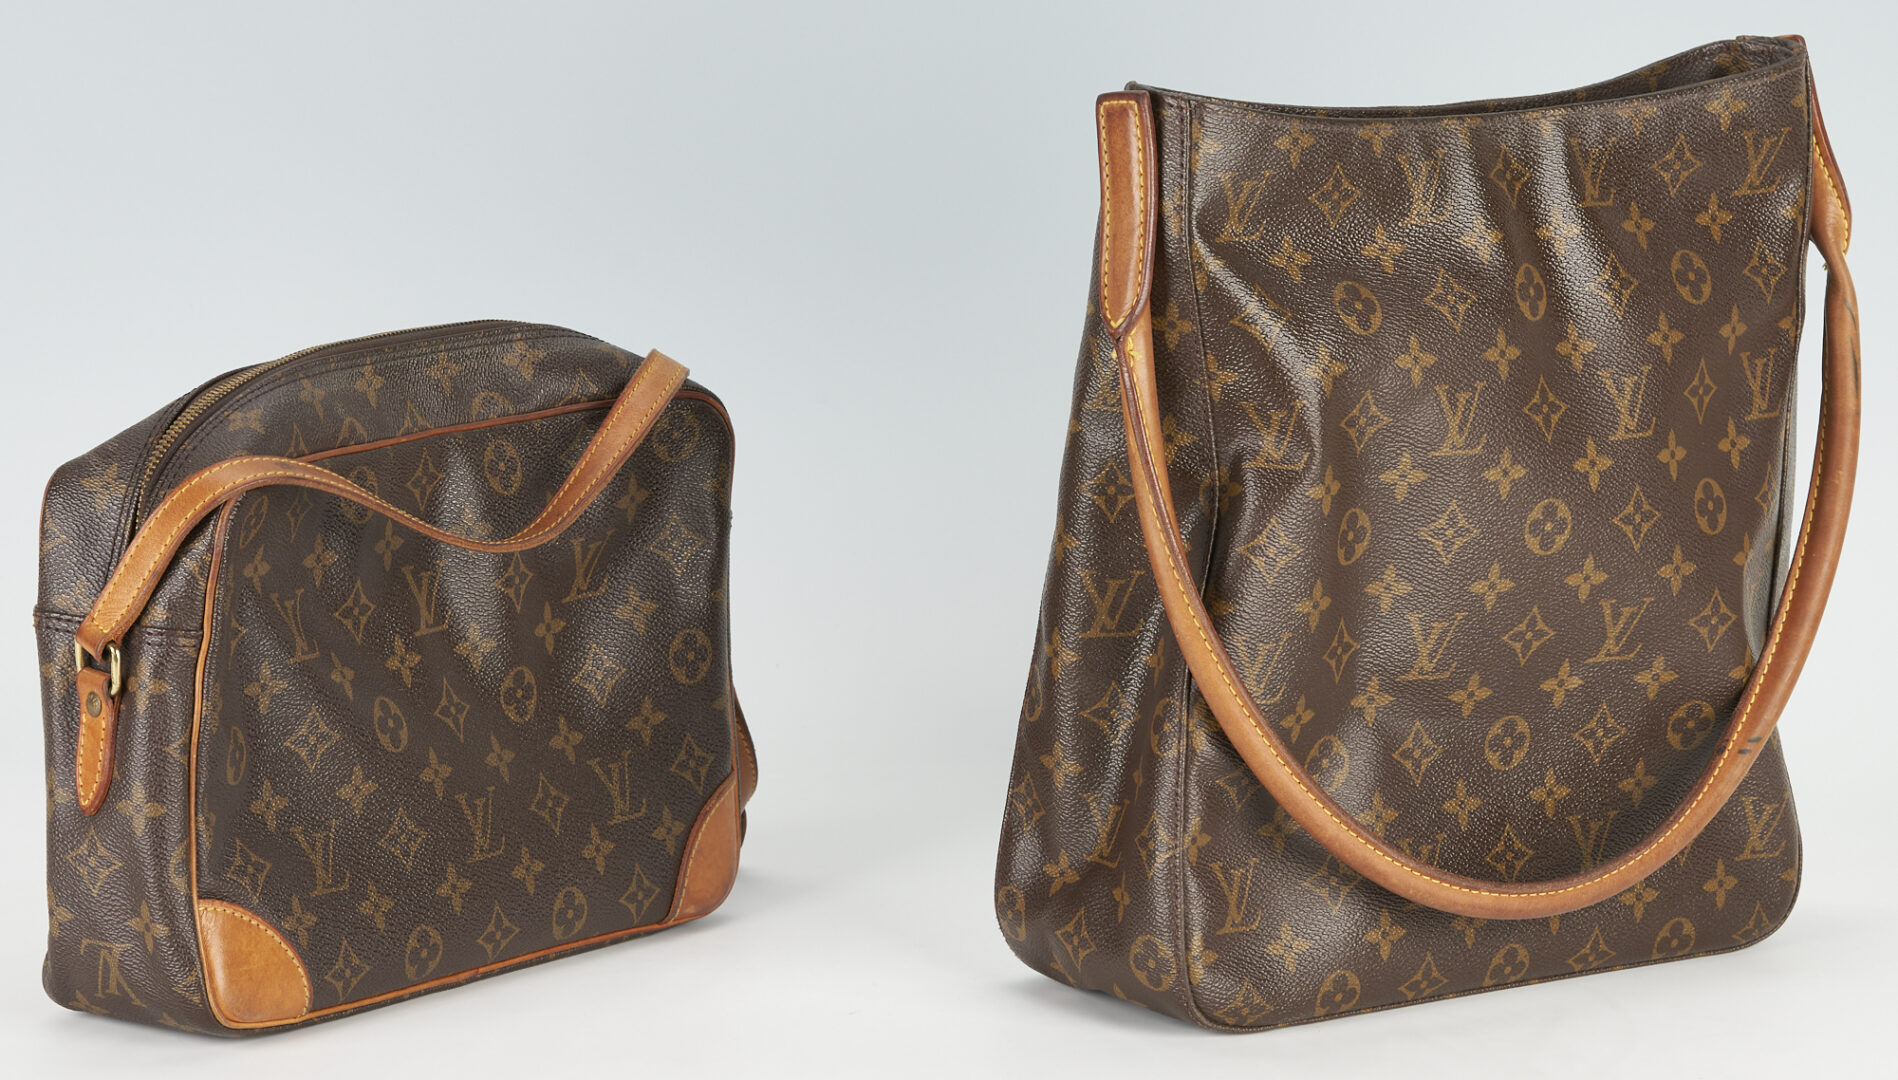 Lot 129: Two Louis Vuitton Handbags, Looping and Trocadero